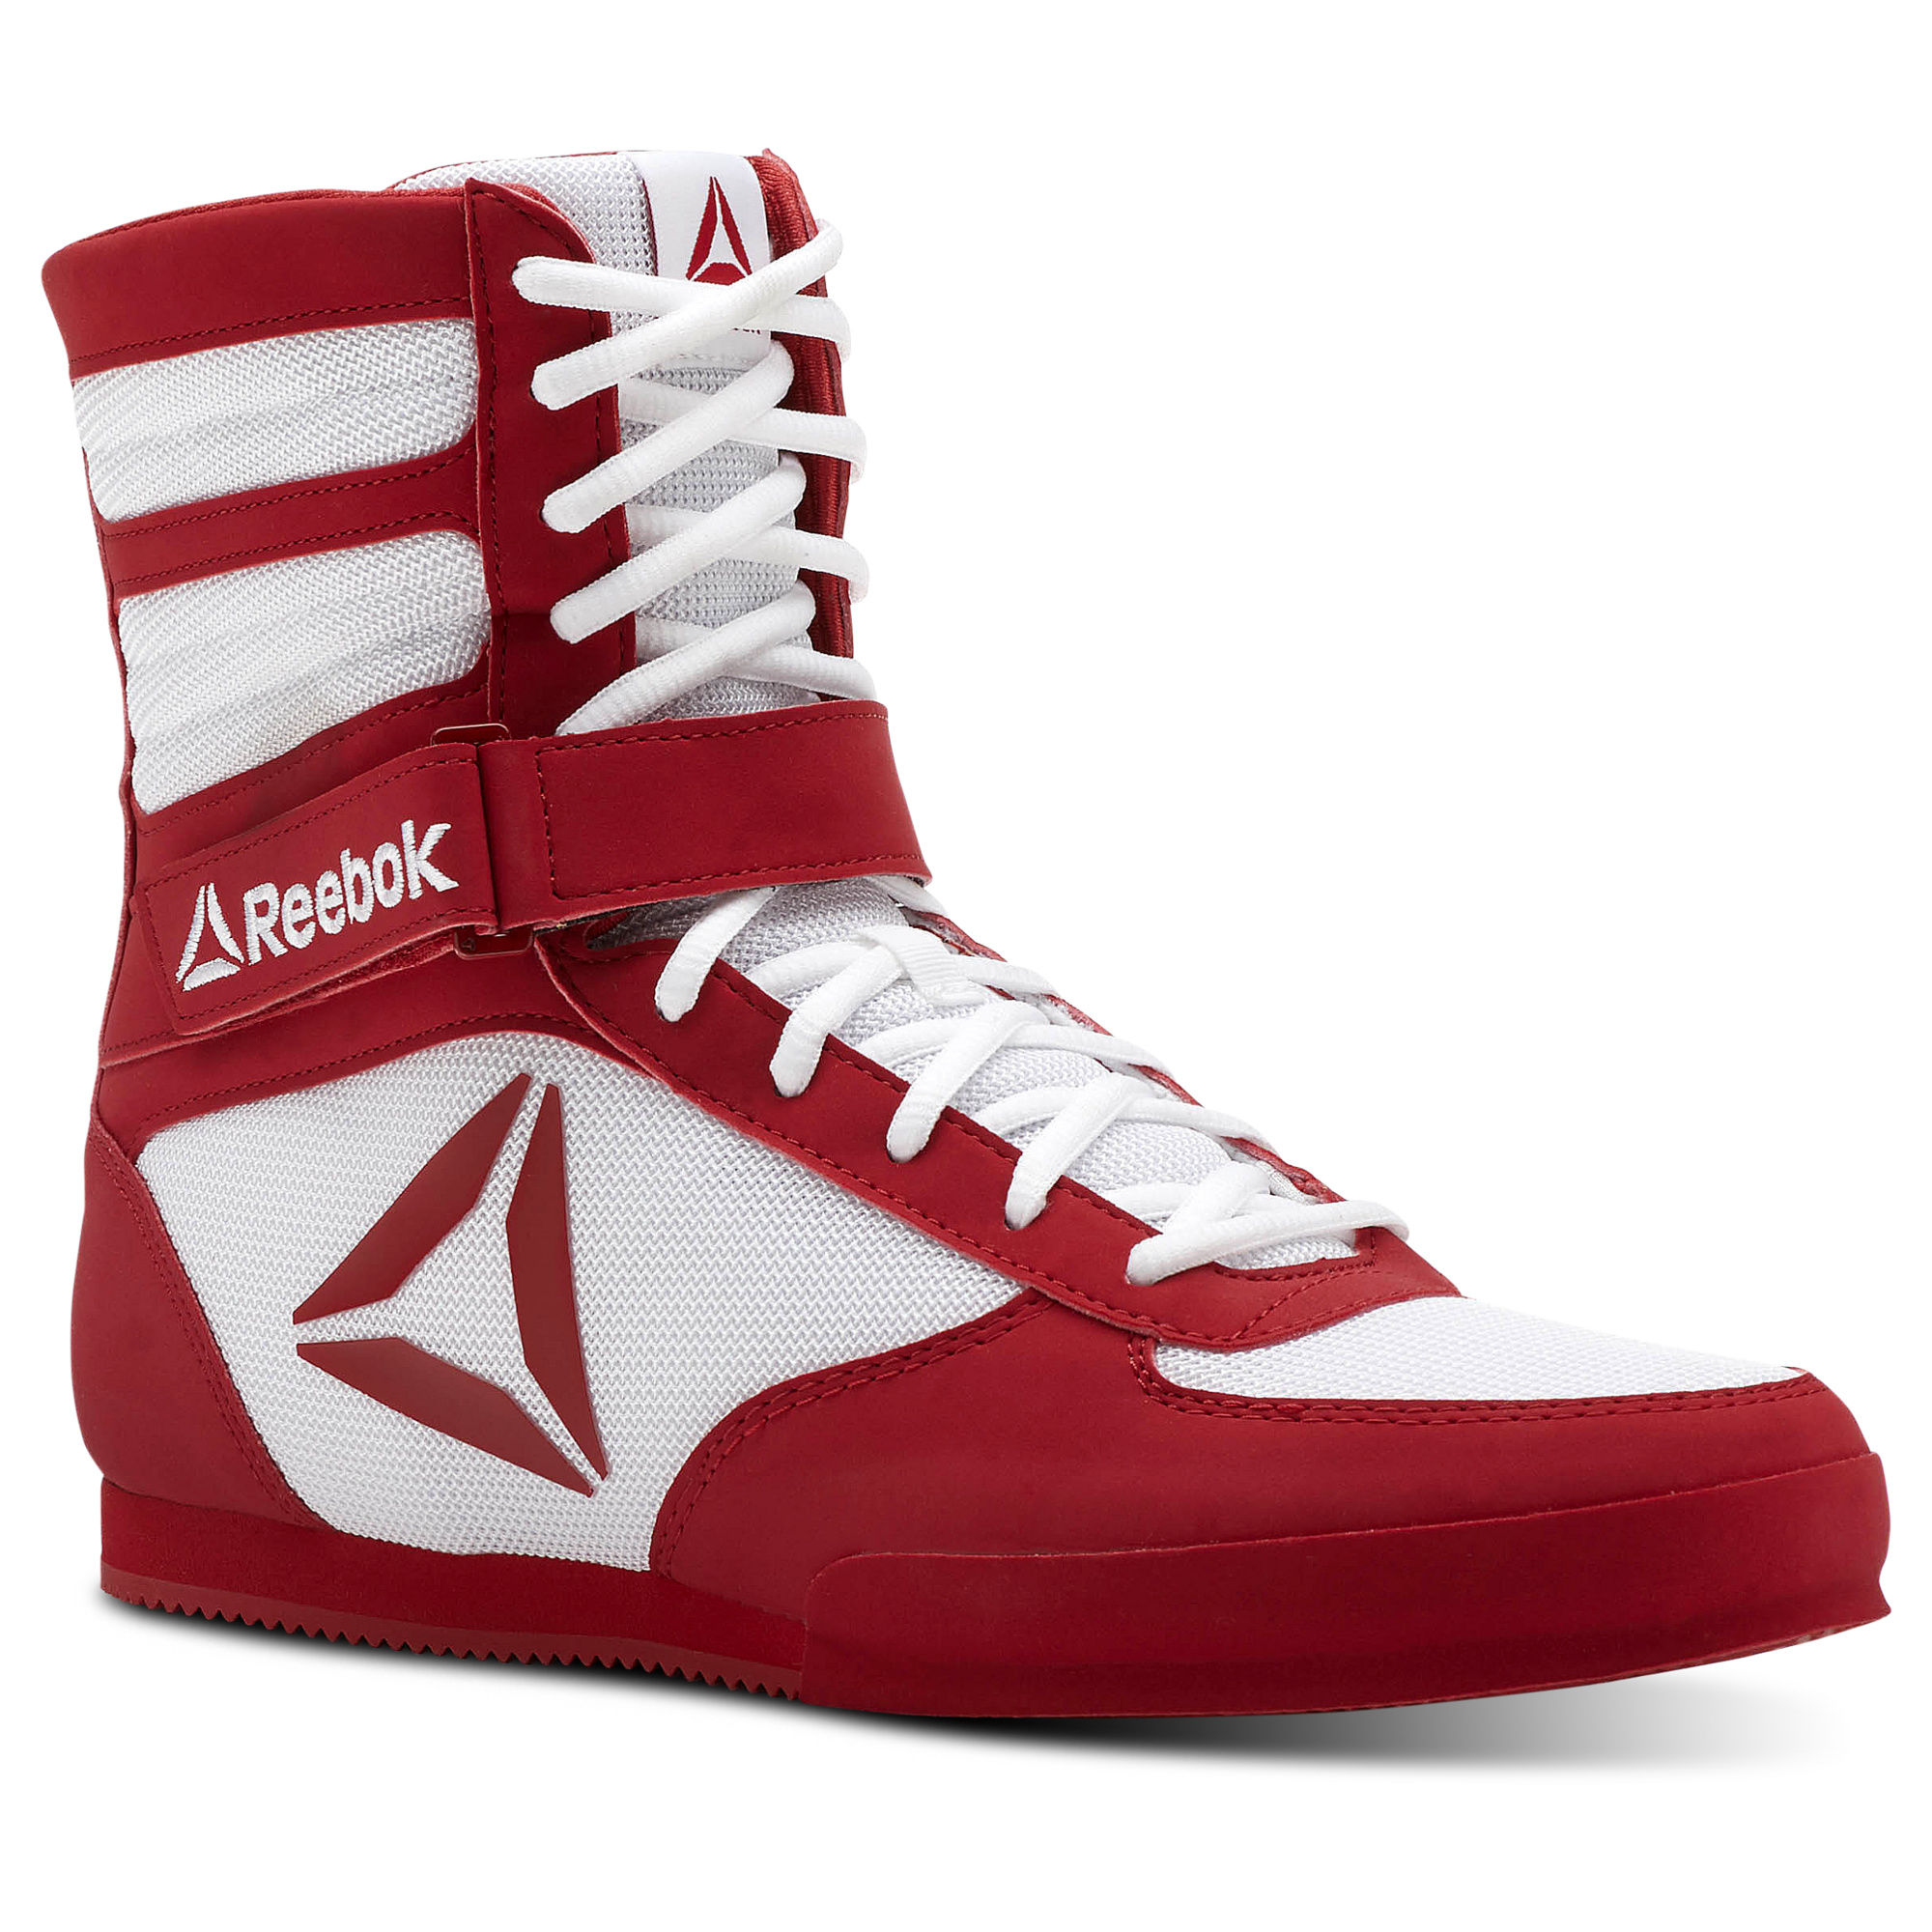 Reebok boxing. Reebok / боксерки Boxing Boot. Боксёрки adidas Boxing Boots. Reebok боксерки мужские. Reebok Combat боксерки.